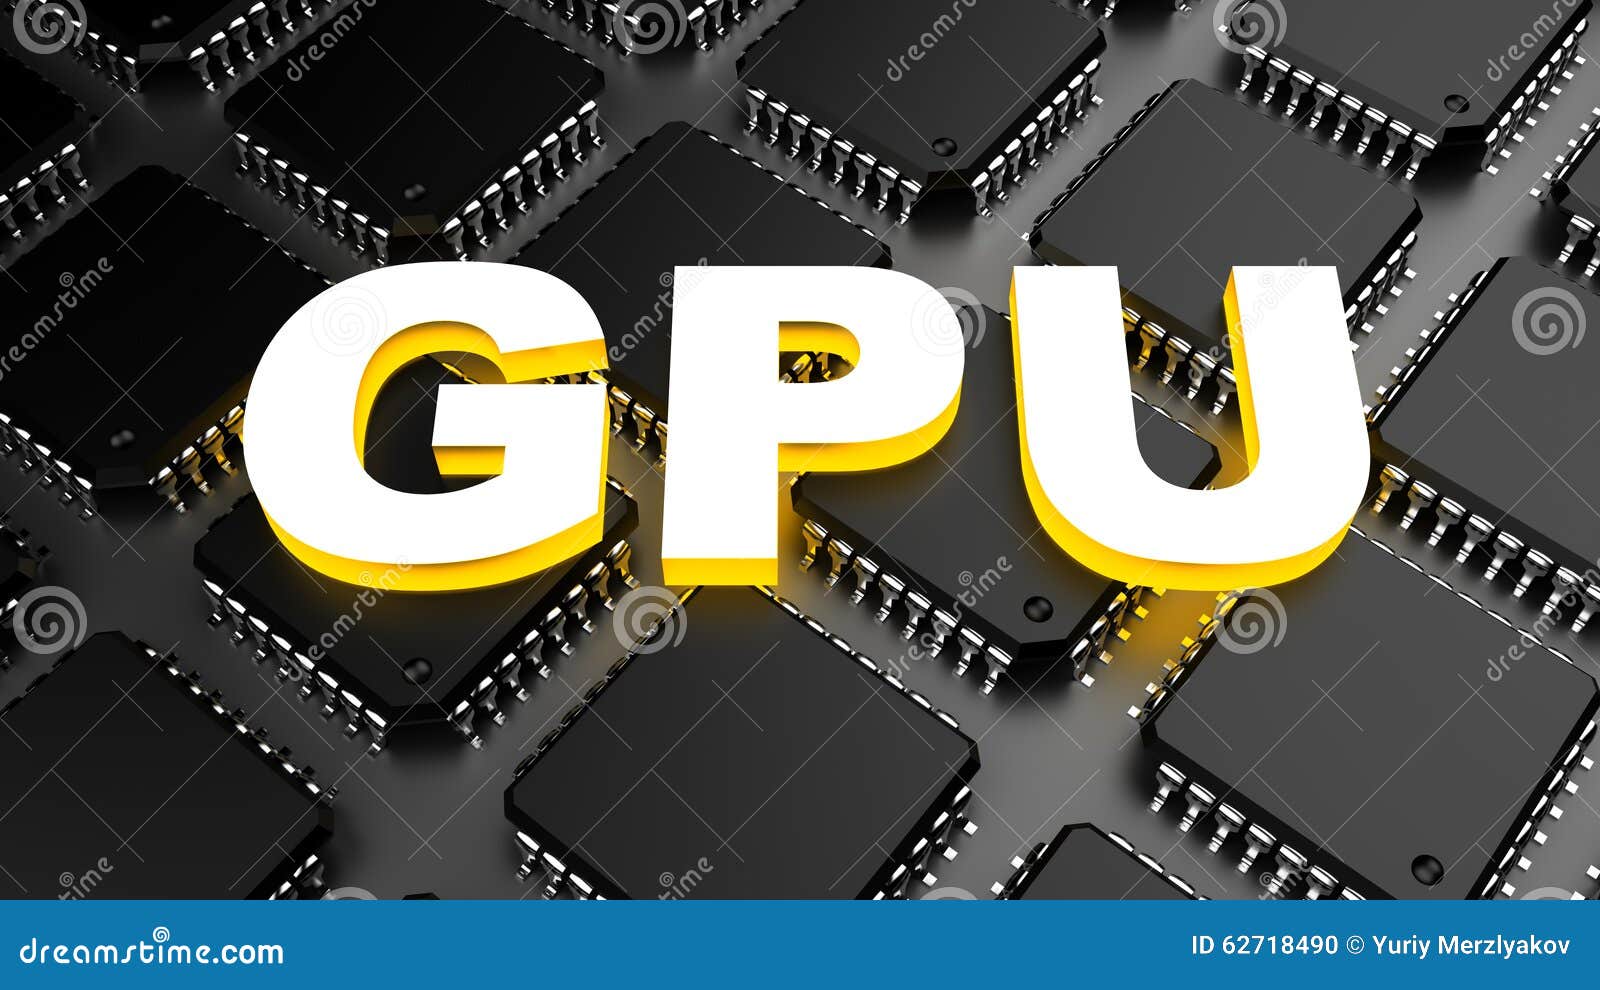 graphics processing unit (gpu)